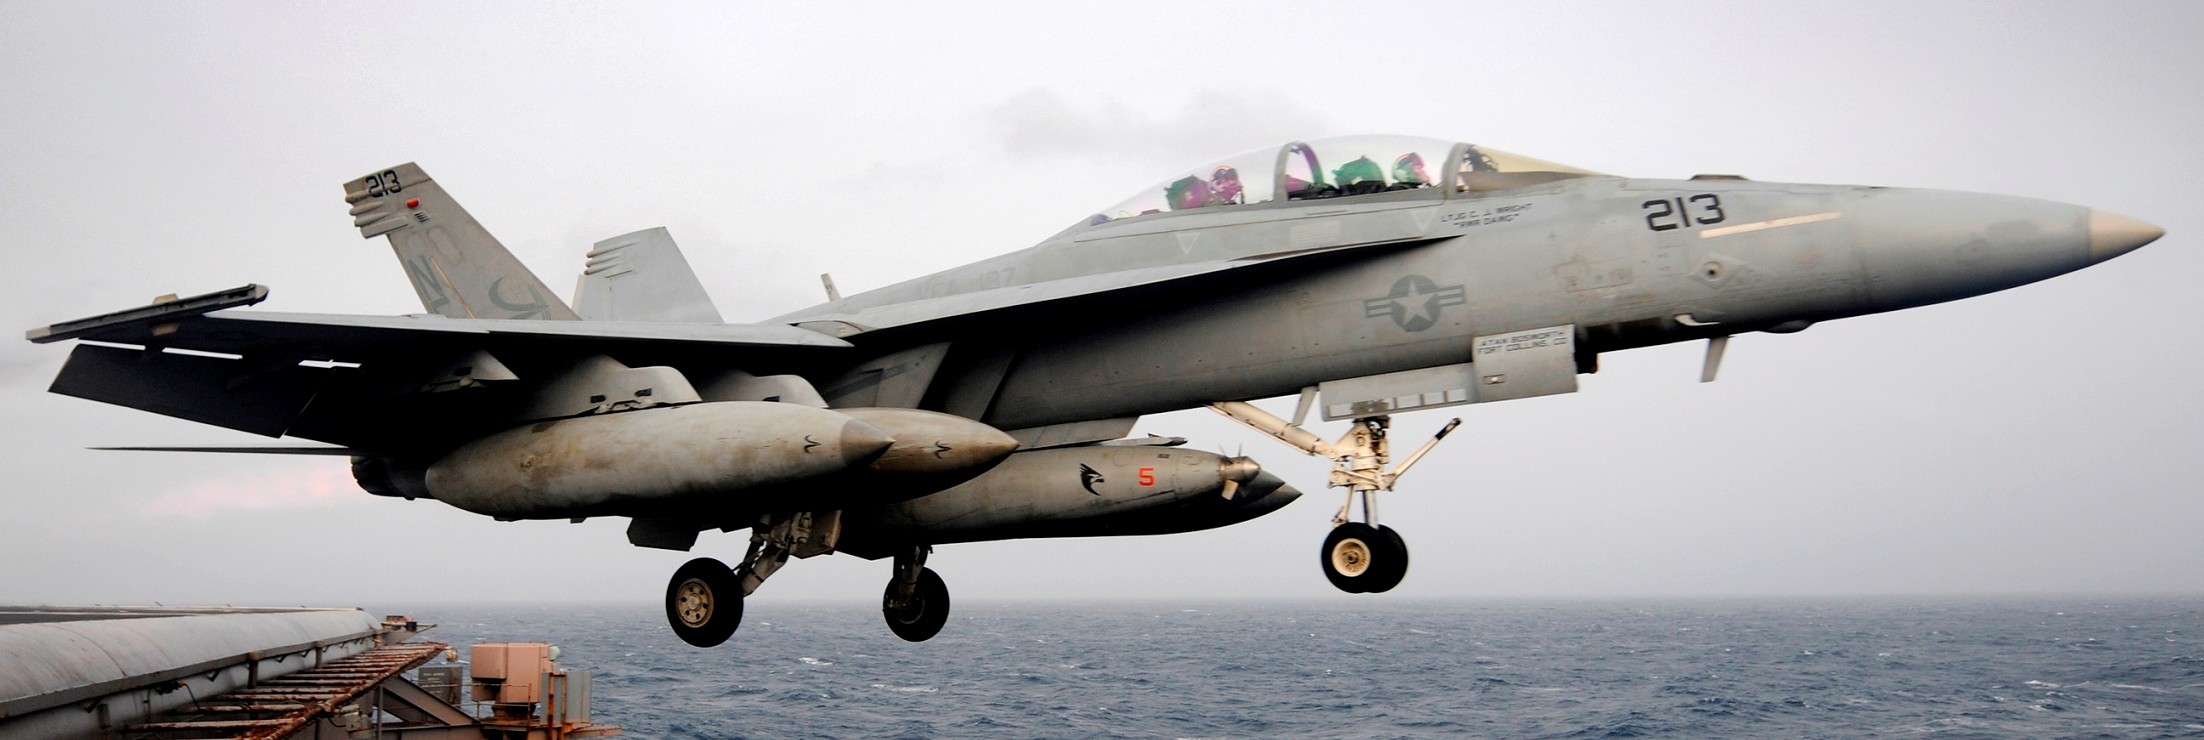 vfa-137 kestrels strike fighter squadron f/a-18f super hornet cvw-2 uss abraham lincoln cvn-72 2012 24